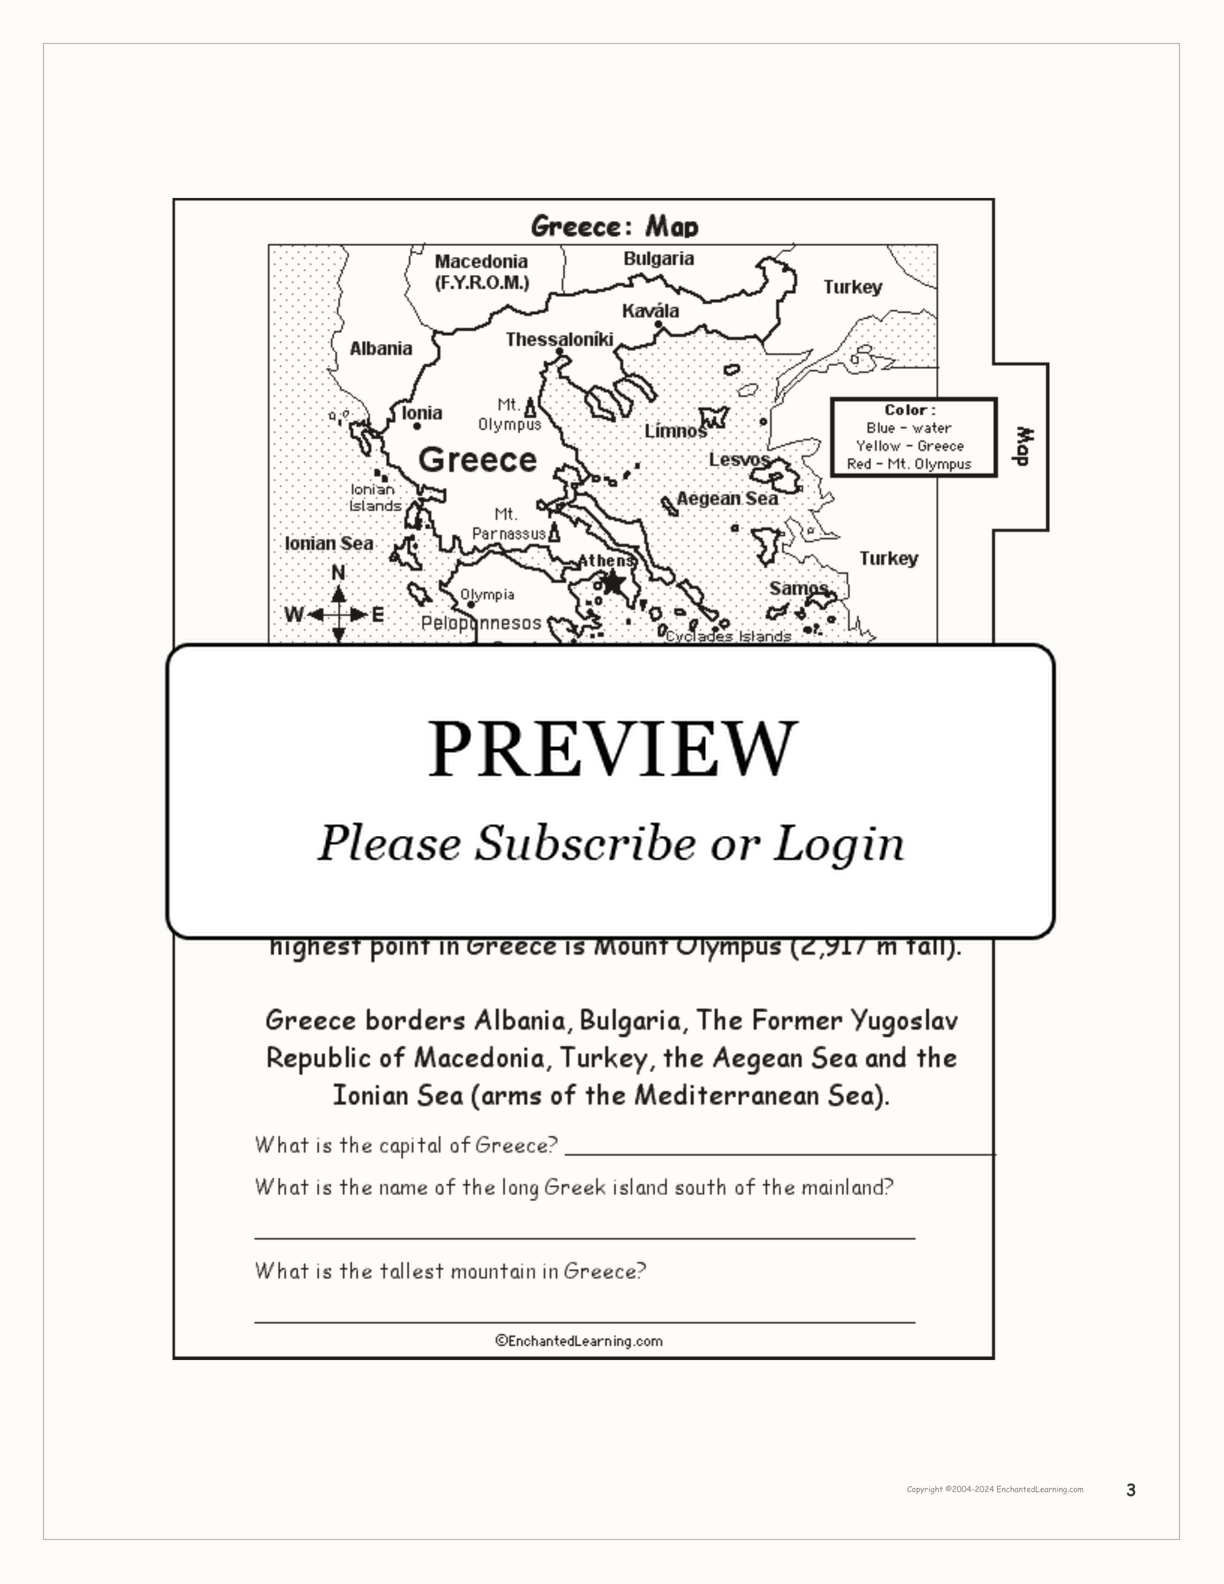 Greece Tab Book interactive printout page 3